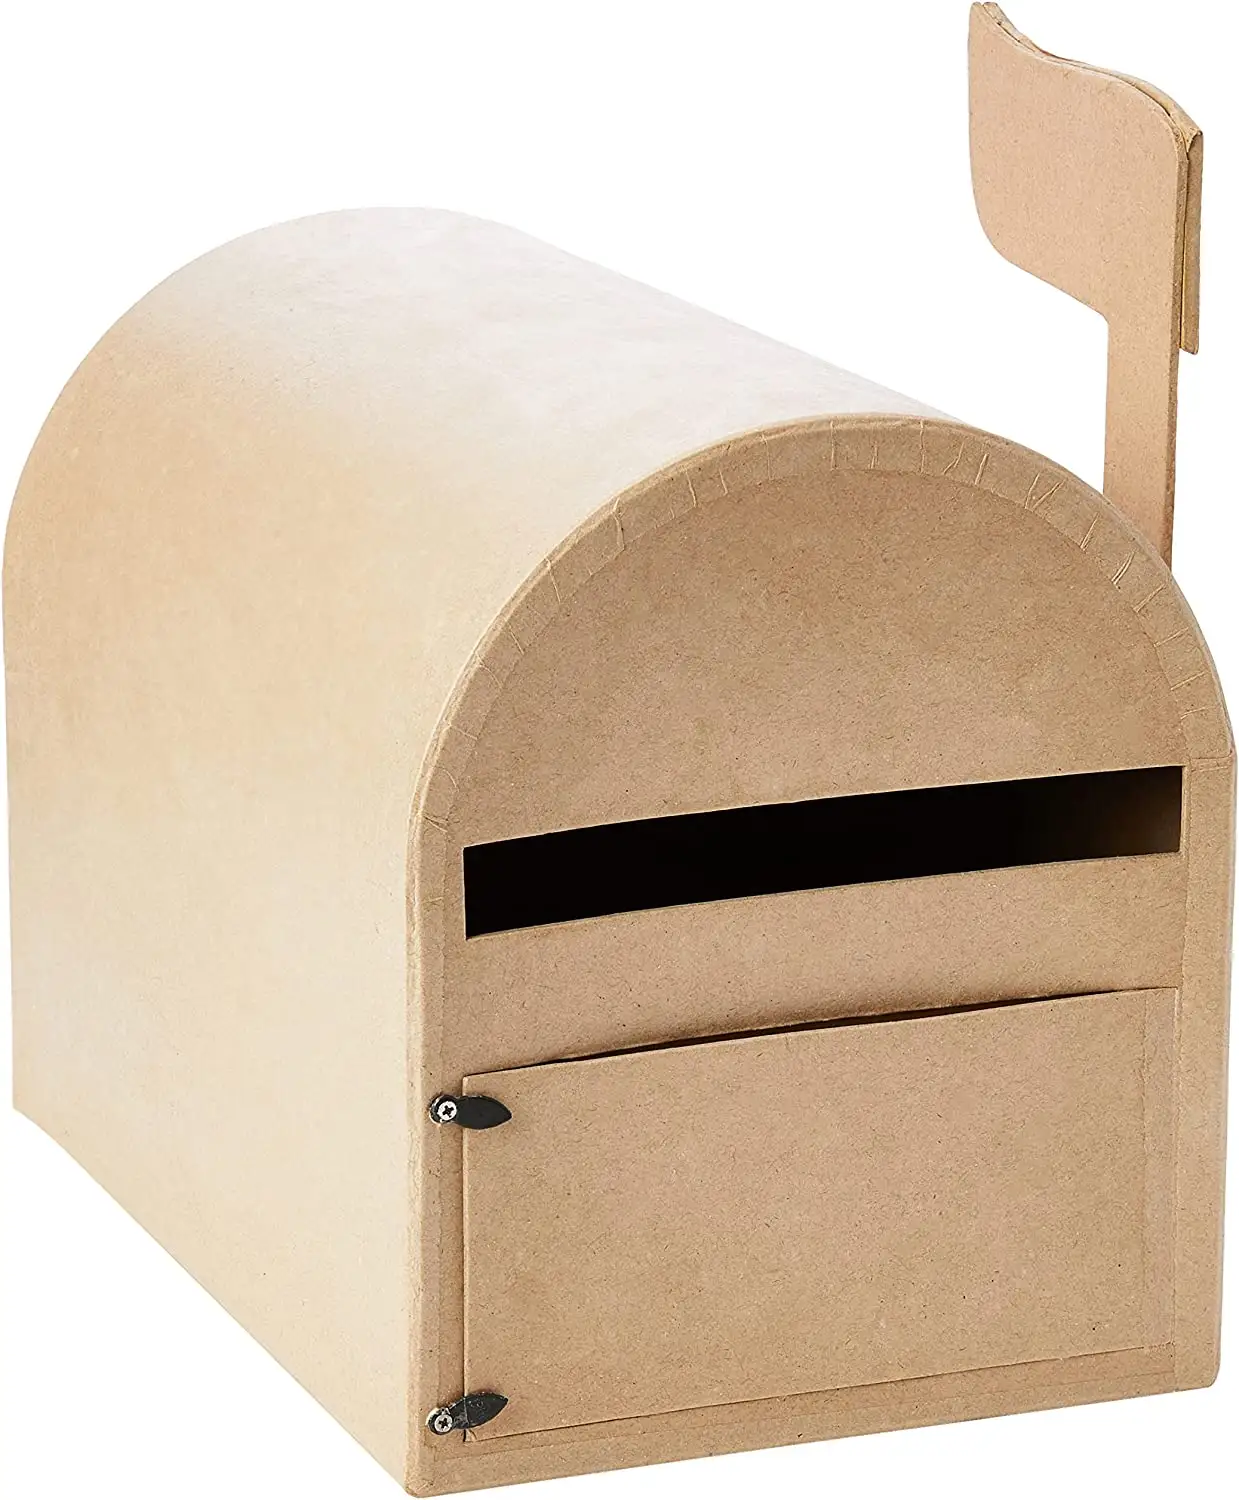 TH CB-010 Special Design Decorative Italian form Mailbox shape carton Paper box